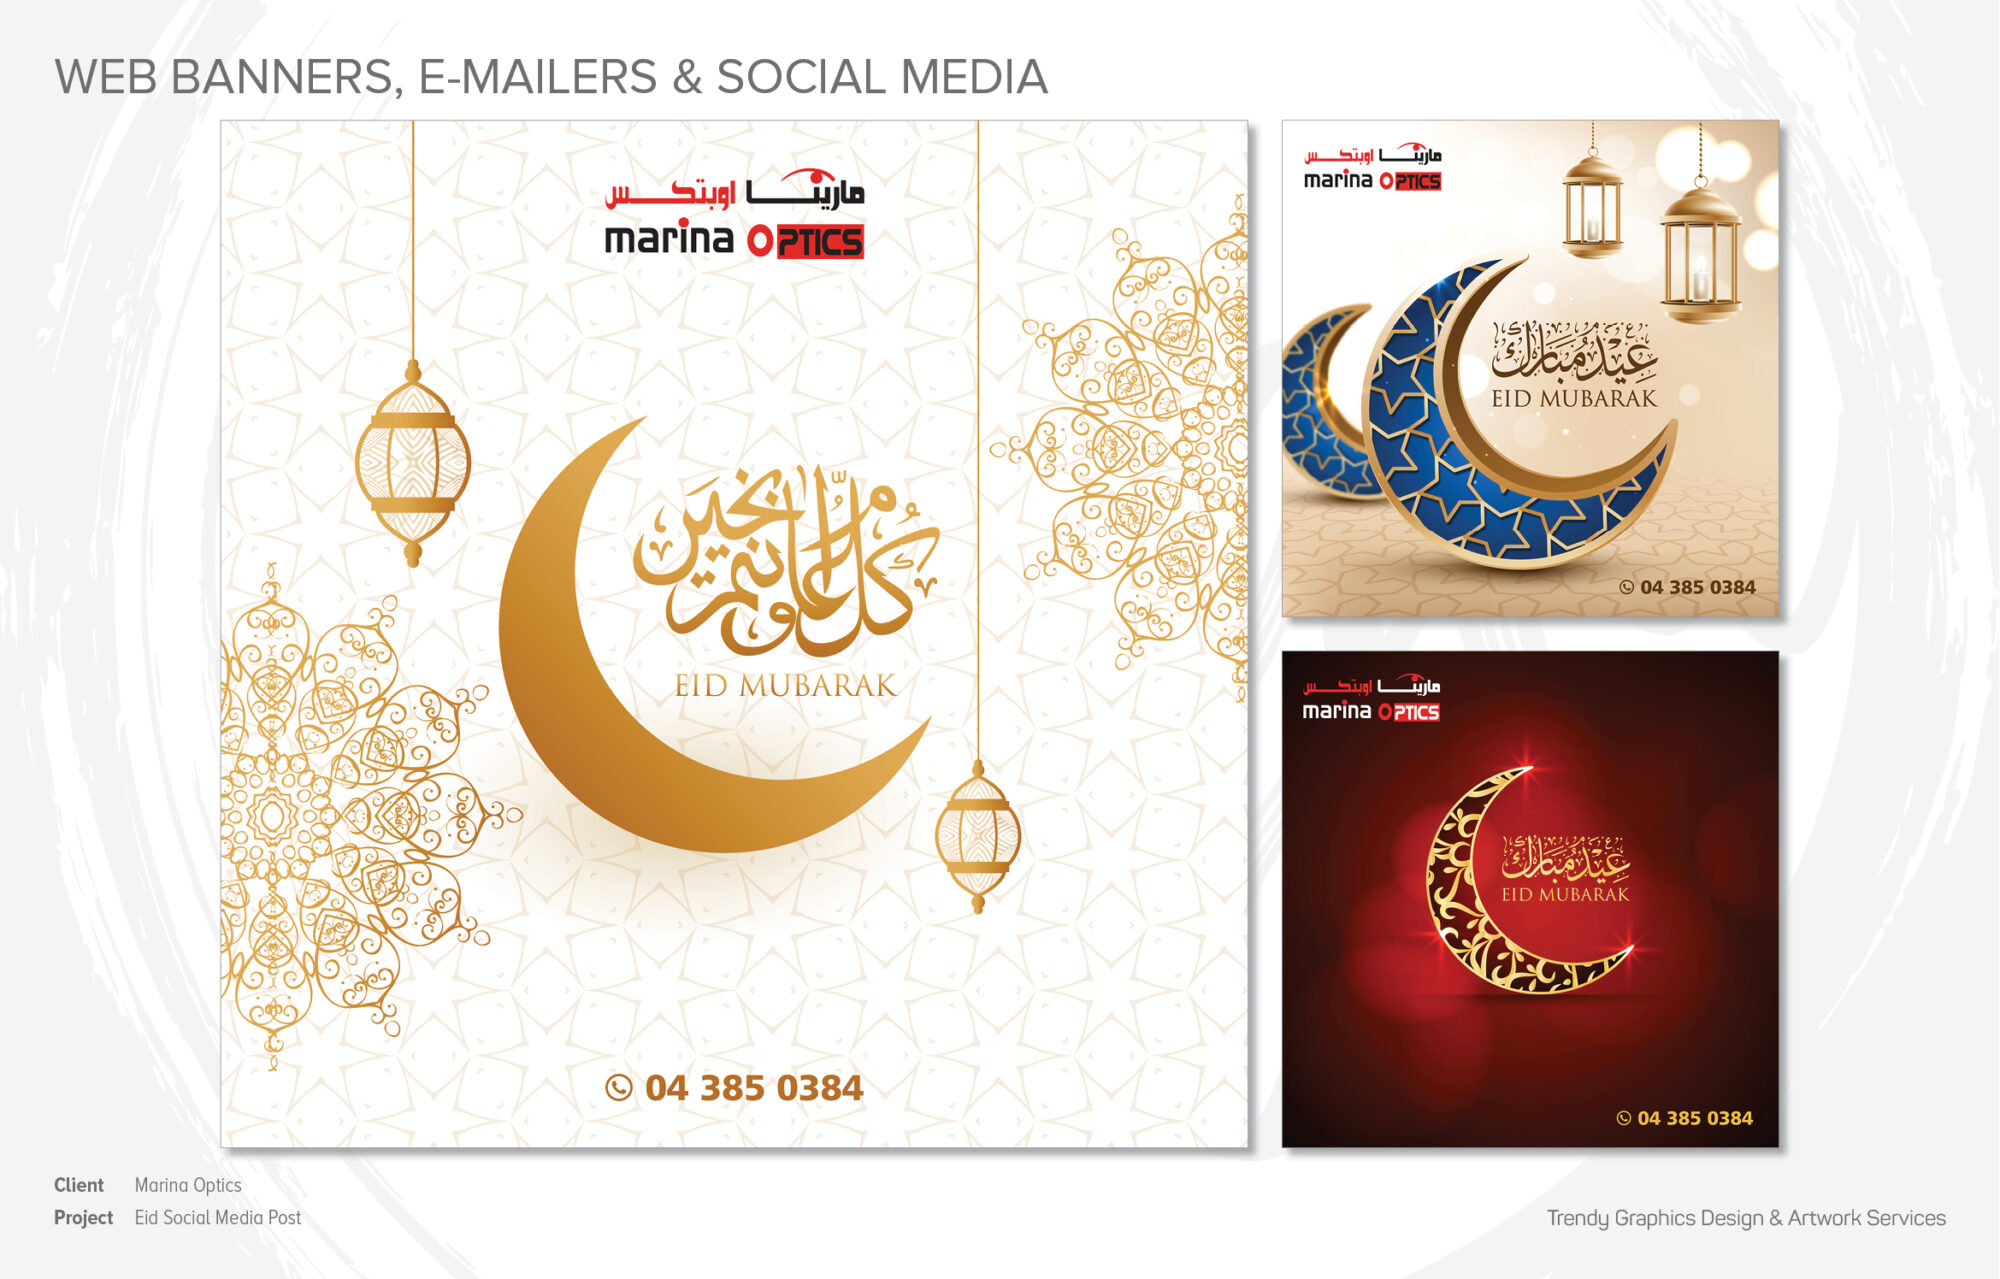 Marina Optics – Eid Social Media Post